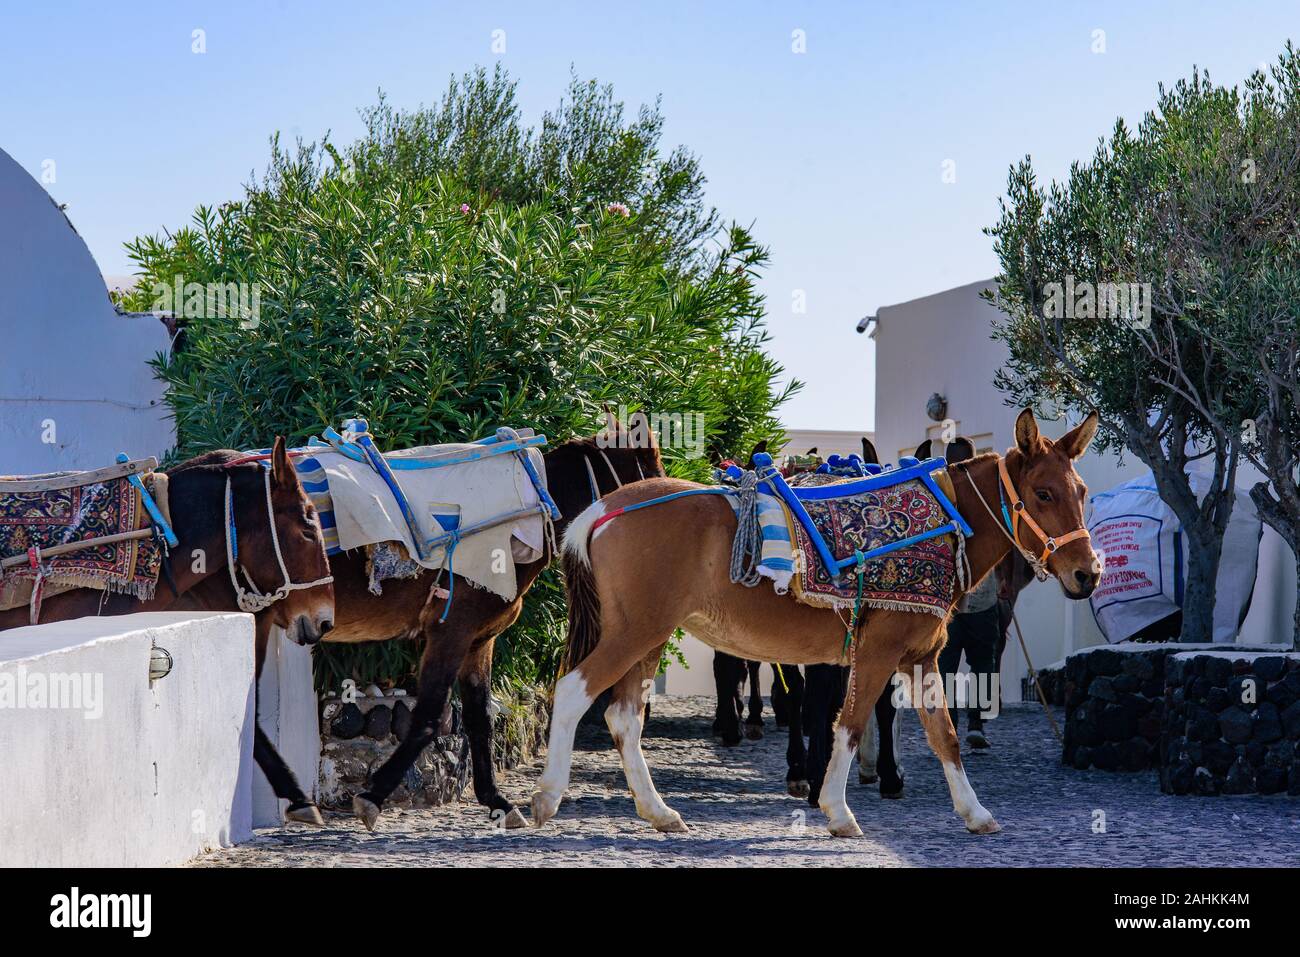 Donkeys carrying cargo in Oia, Santorini, Greece Stock Photo